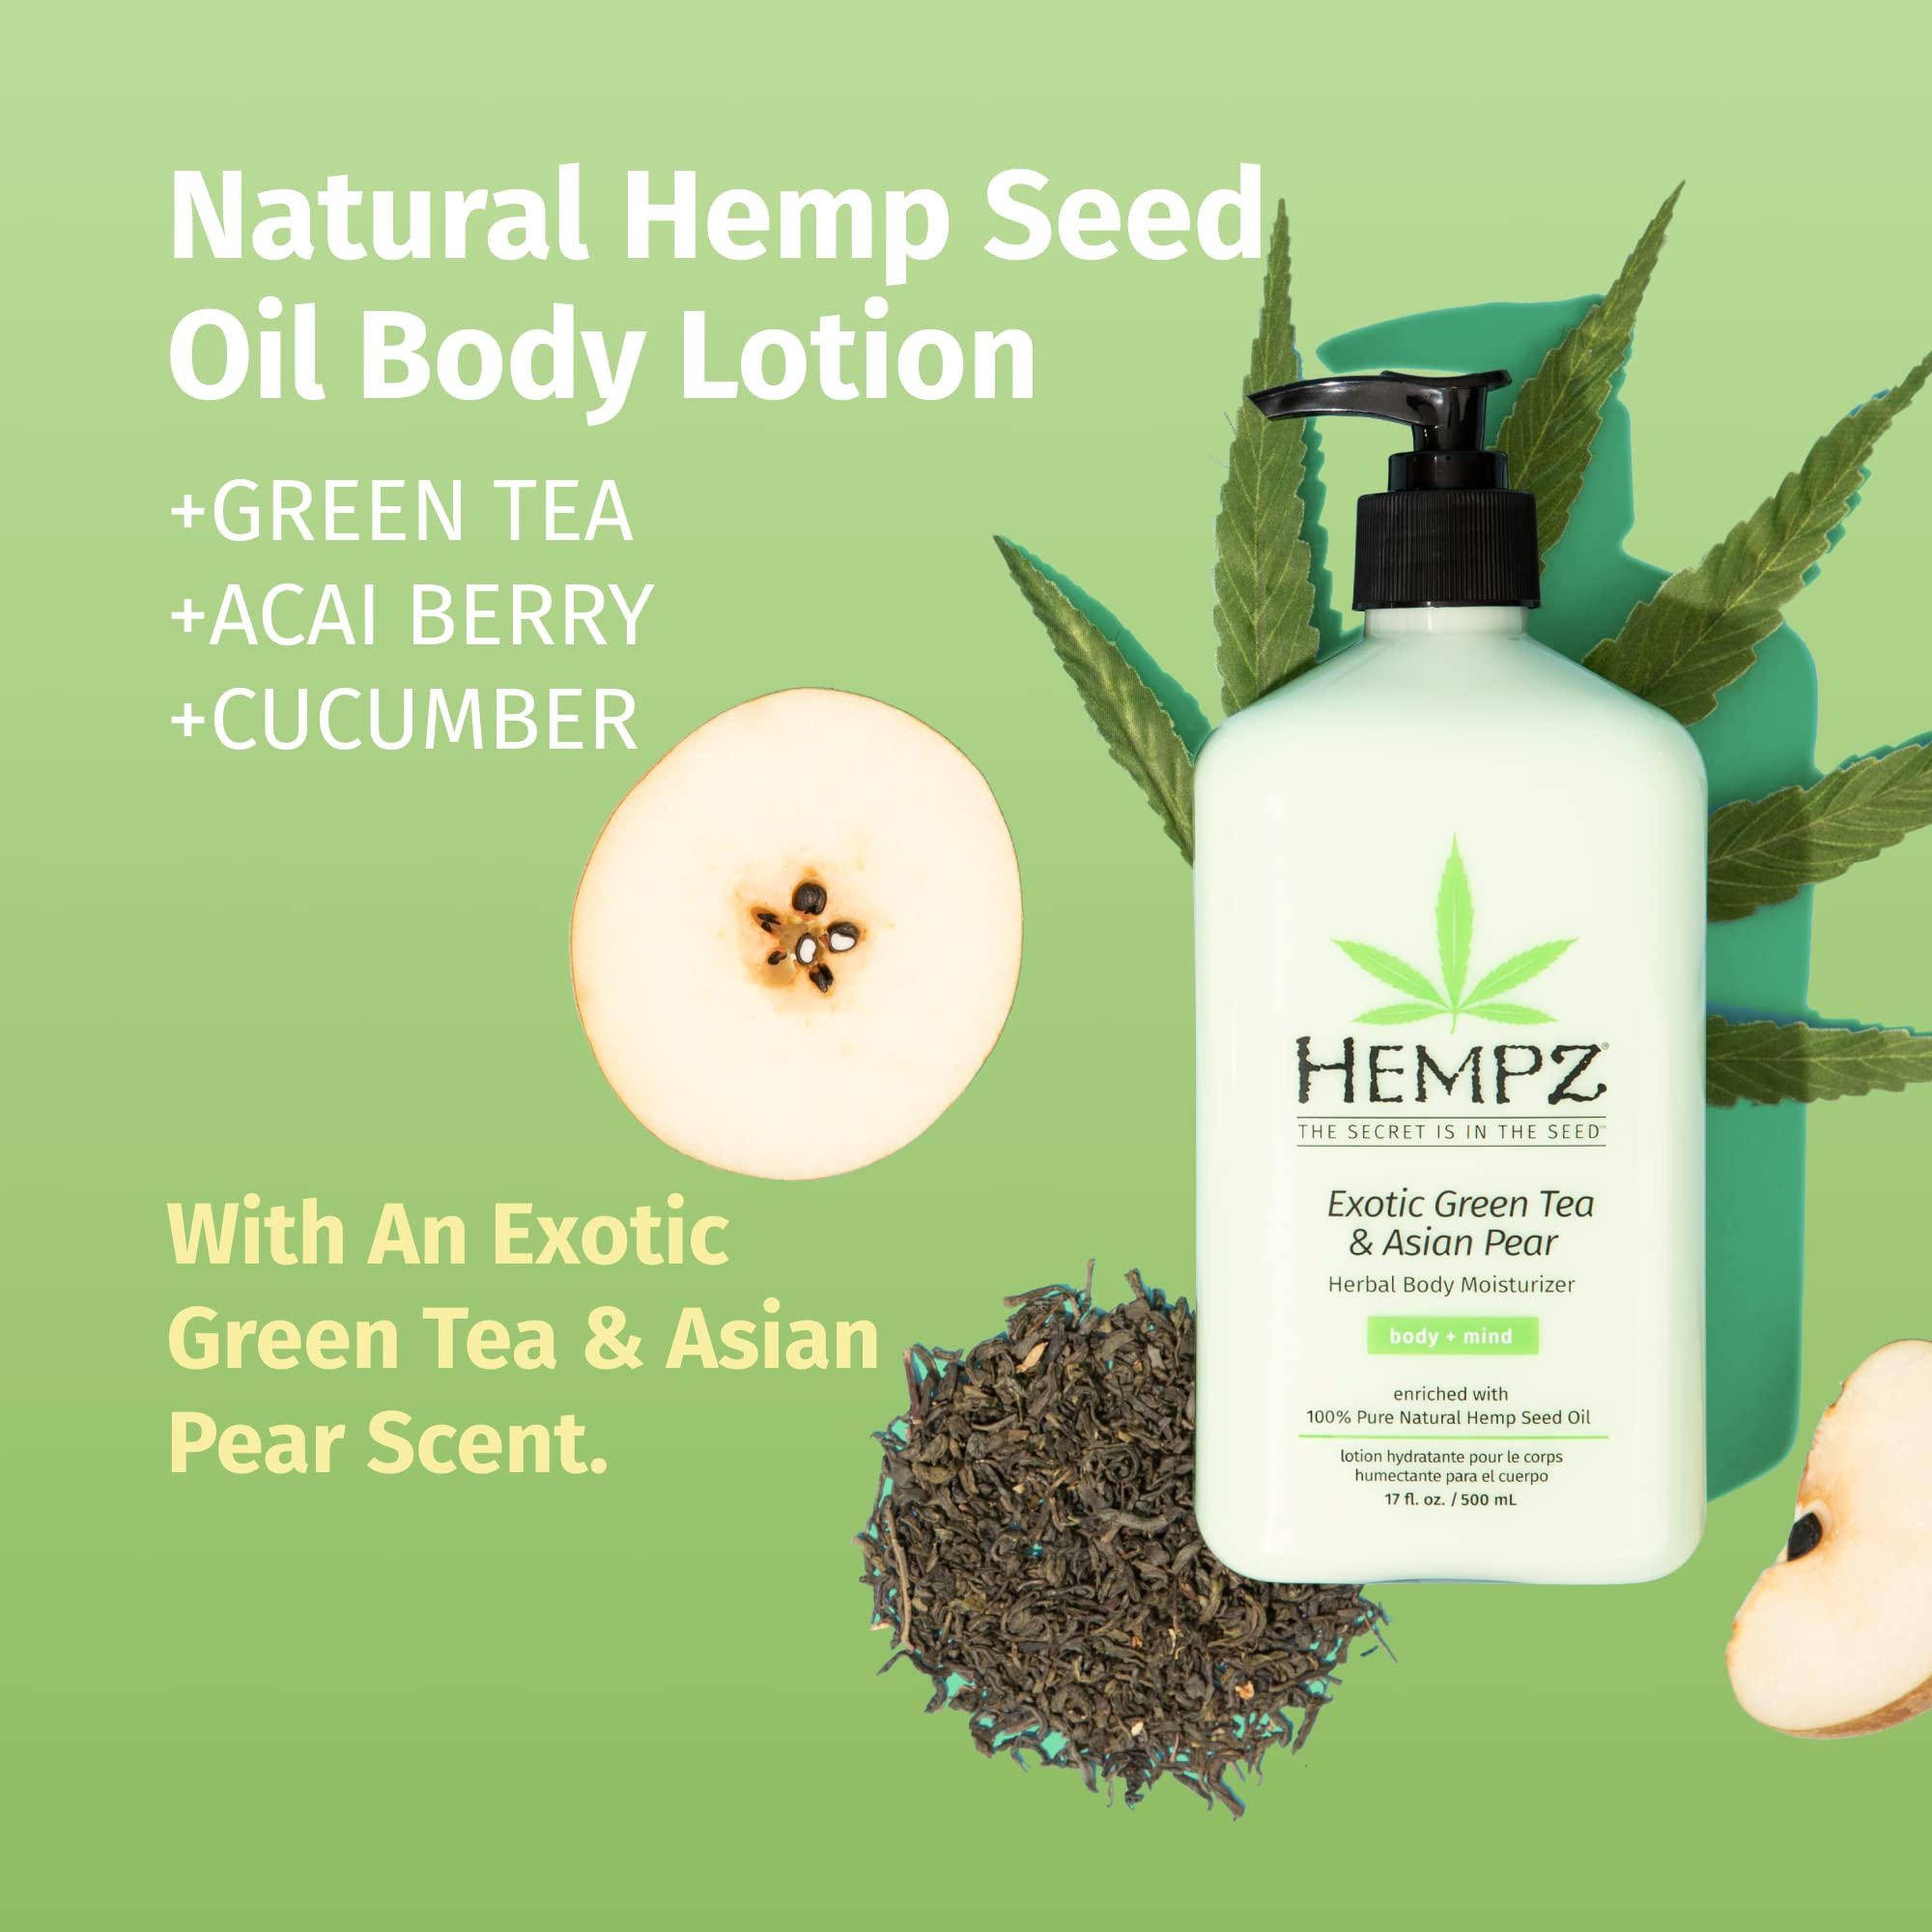 HEMPZ Body Lotion - Green Tea & Asian Pear Daily Moisturizing Cream, Shea Butter Body Moisturizer - Skin Care Products, Hemp Seed Oil - Large